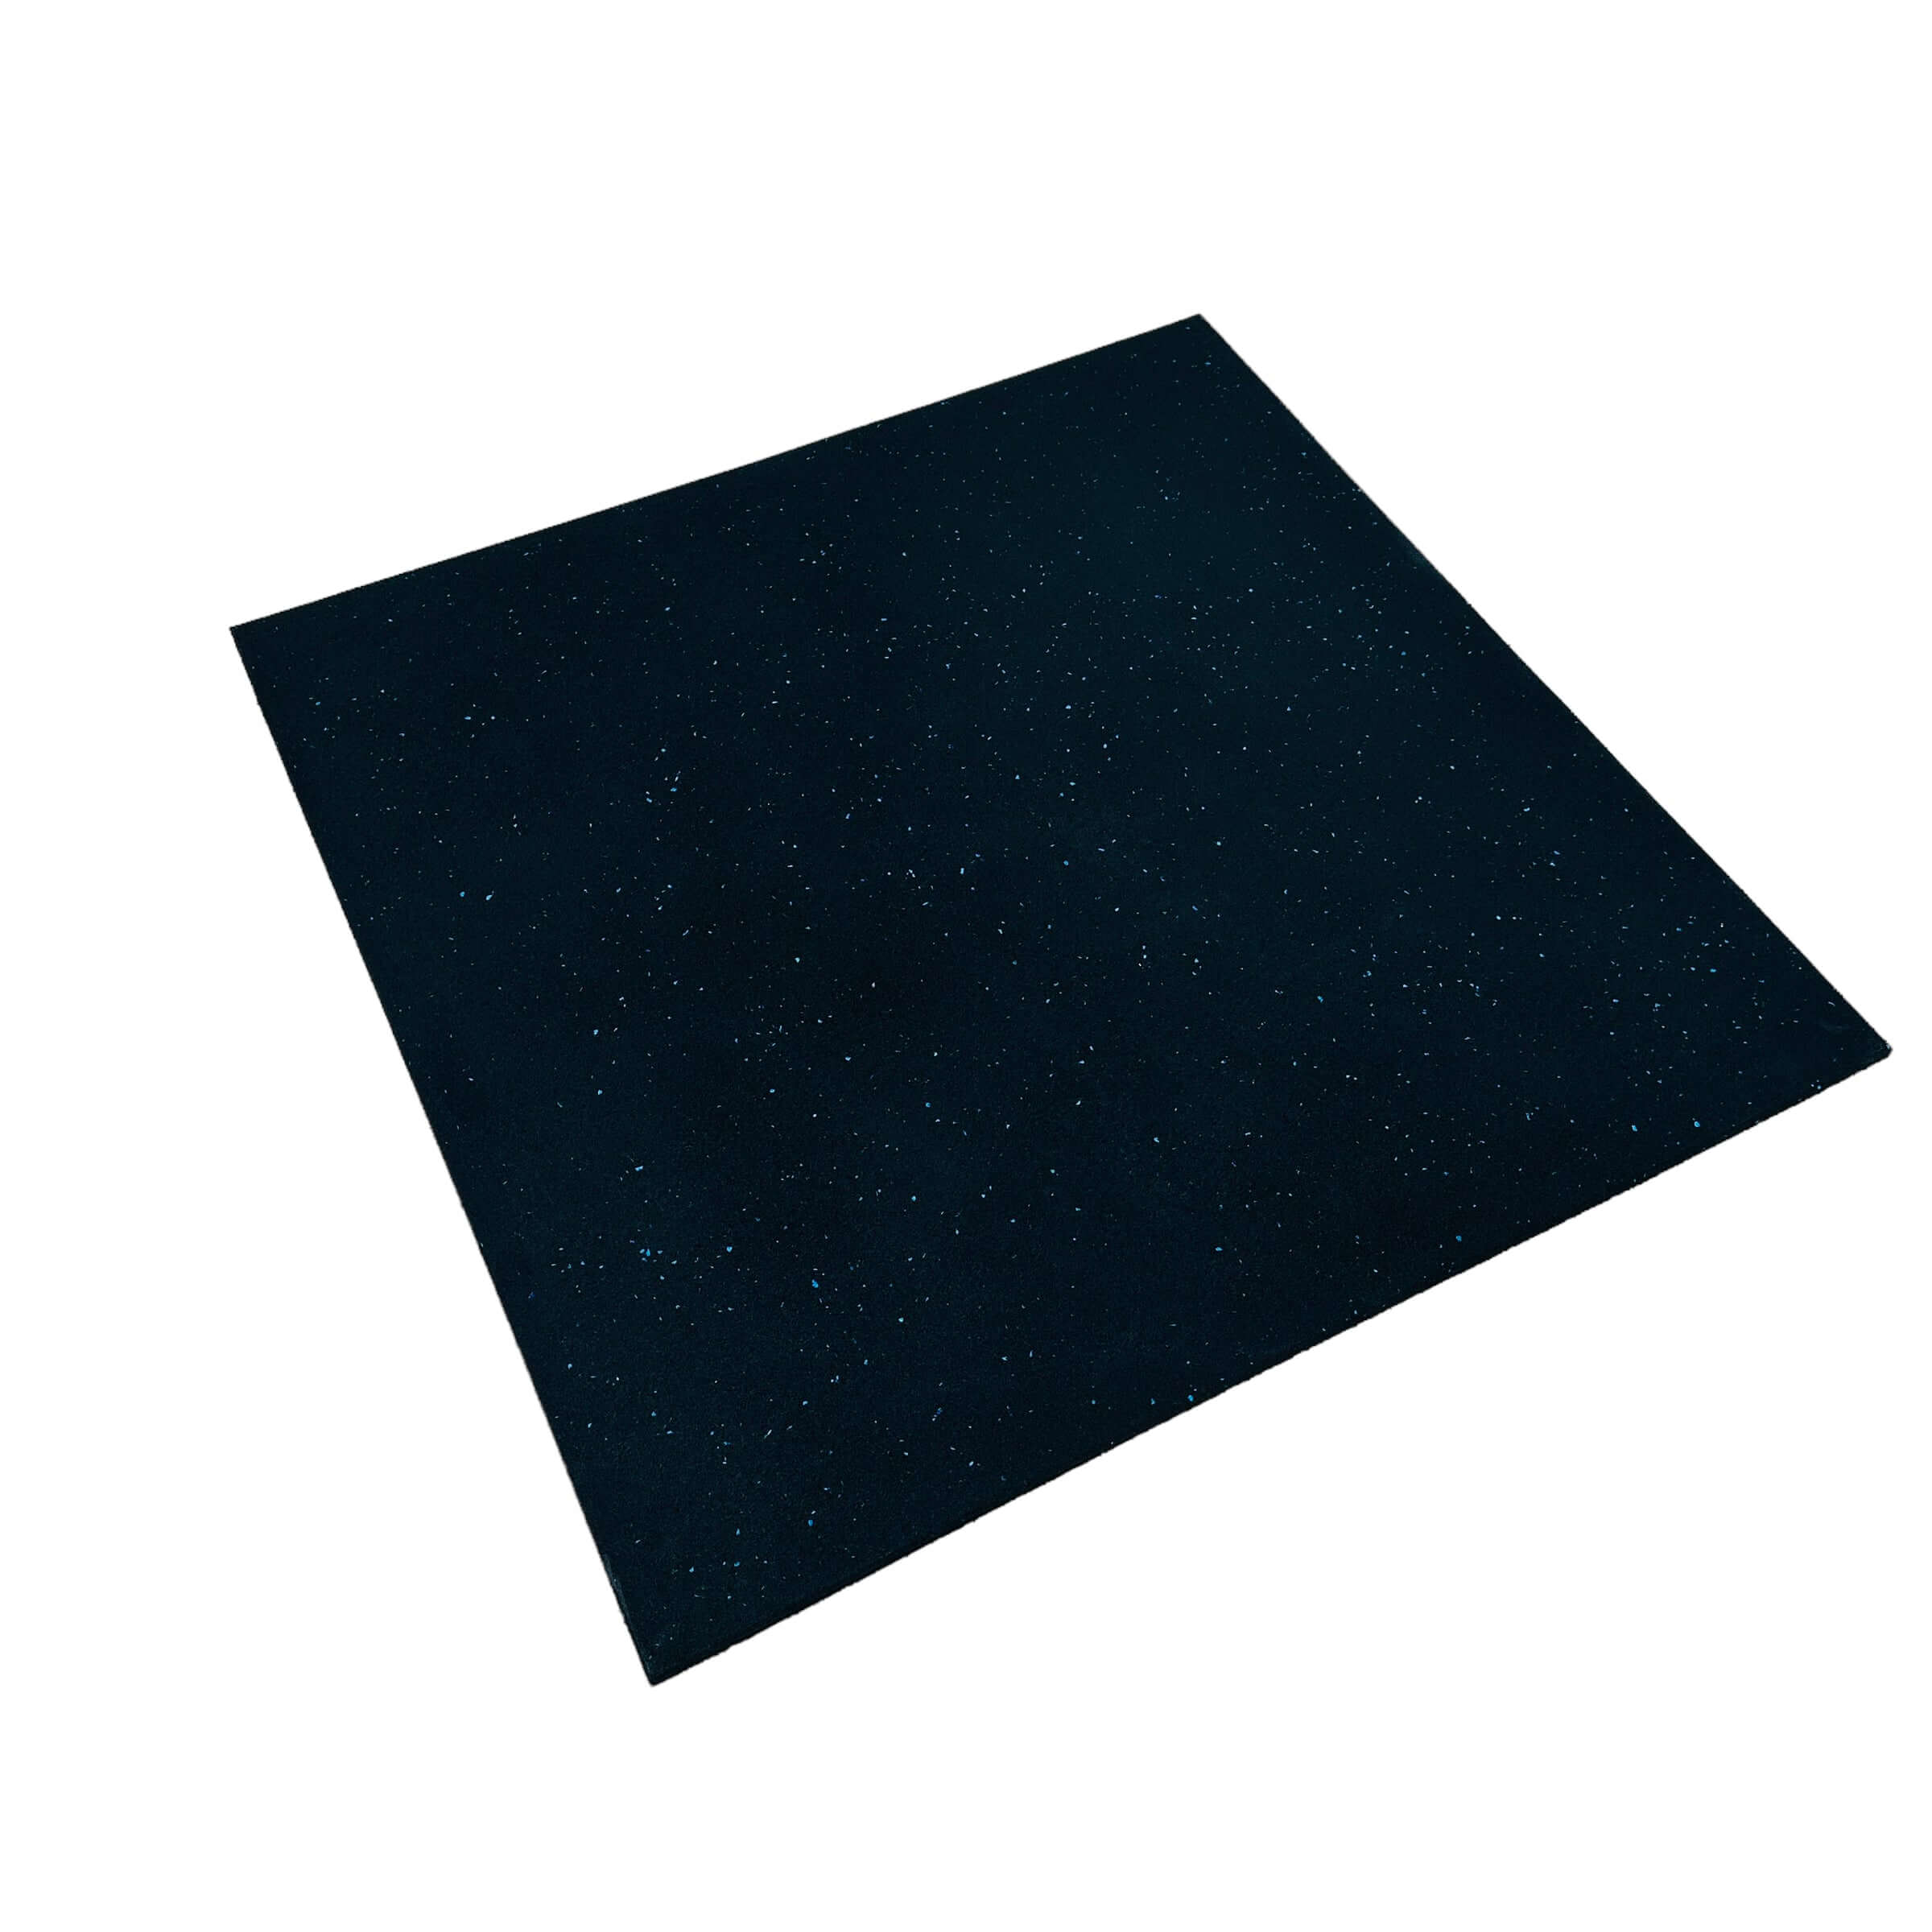 1 x 15mm Rubber Gym Flooring BLACK / BLUE Fleck Dense Tile Mat 1m x 1m | INSOURCE